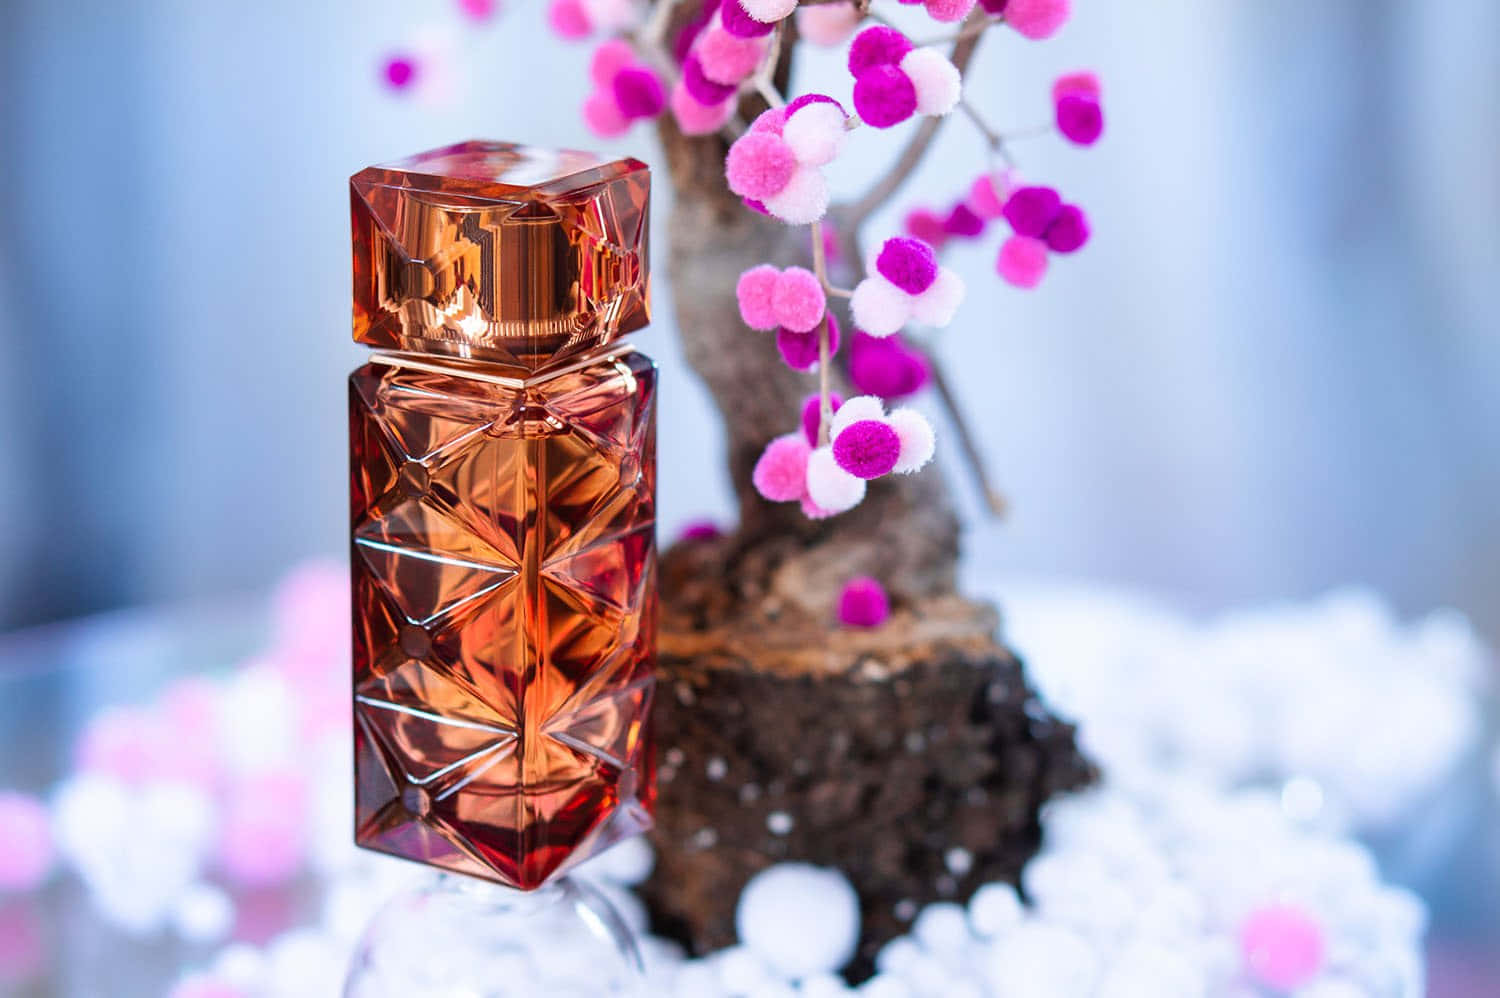 Spring Perfume - Floral Fragrance in Full Bloom Wallpaper